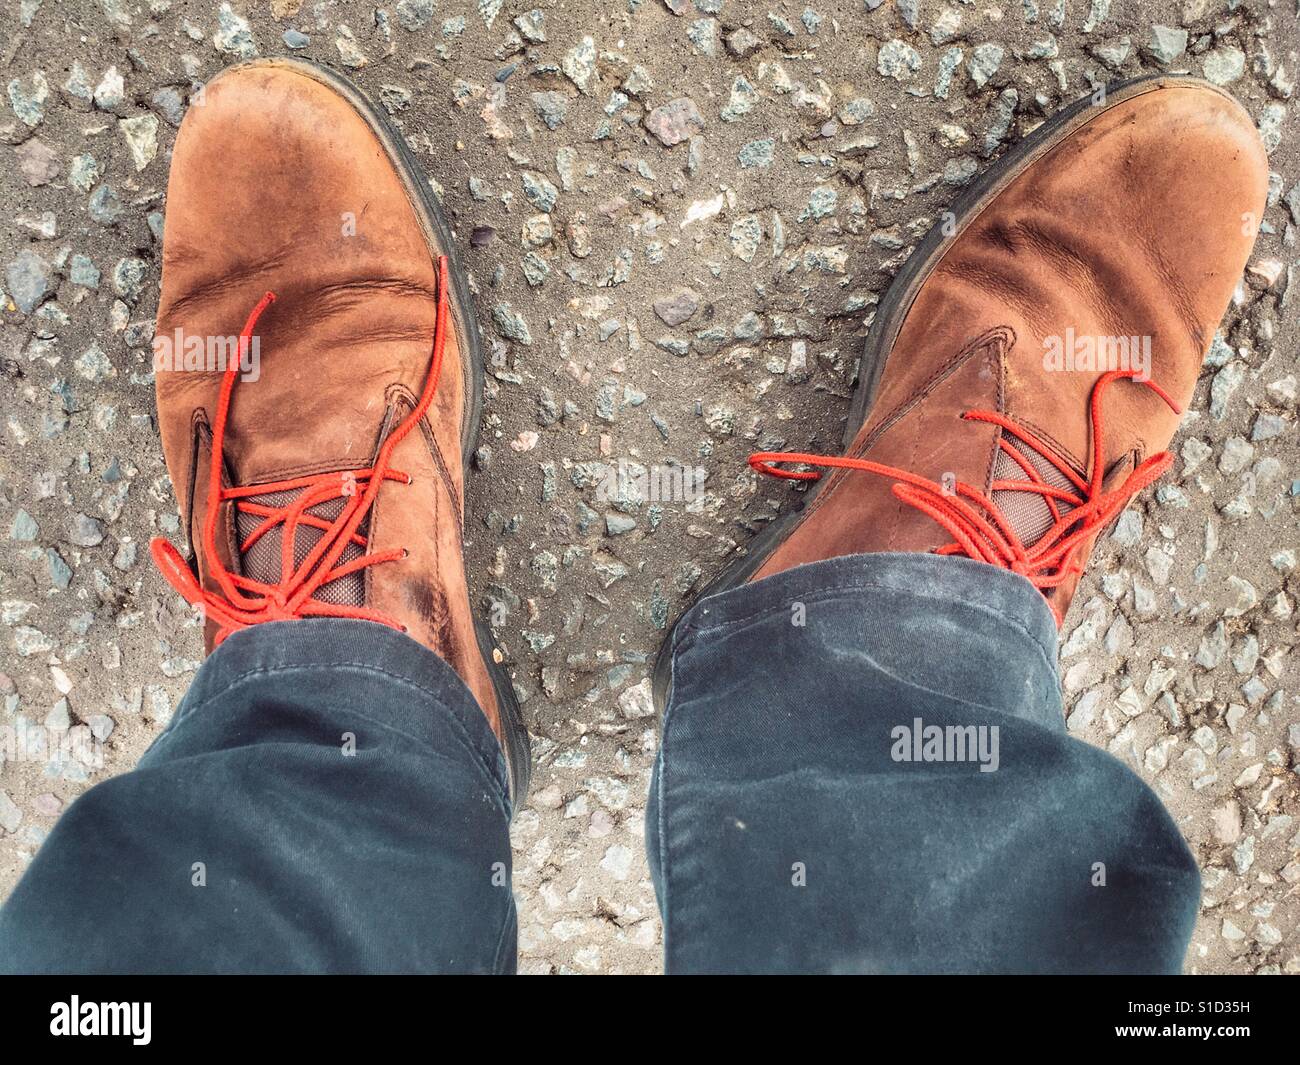 Timberland bradstreet chukka boots hi-res stock photography and images -  Alamy